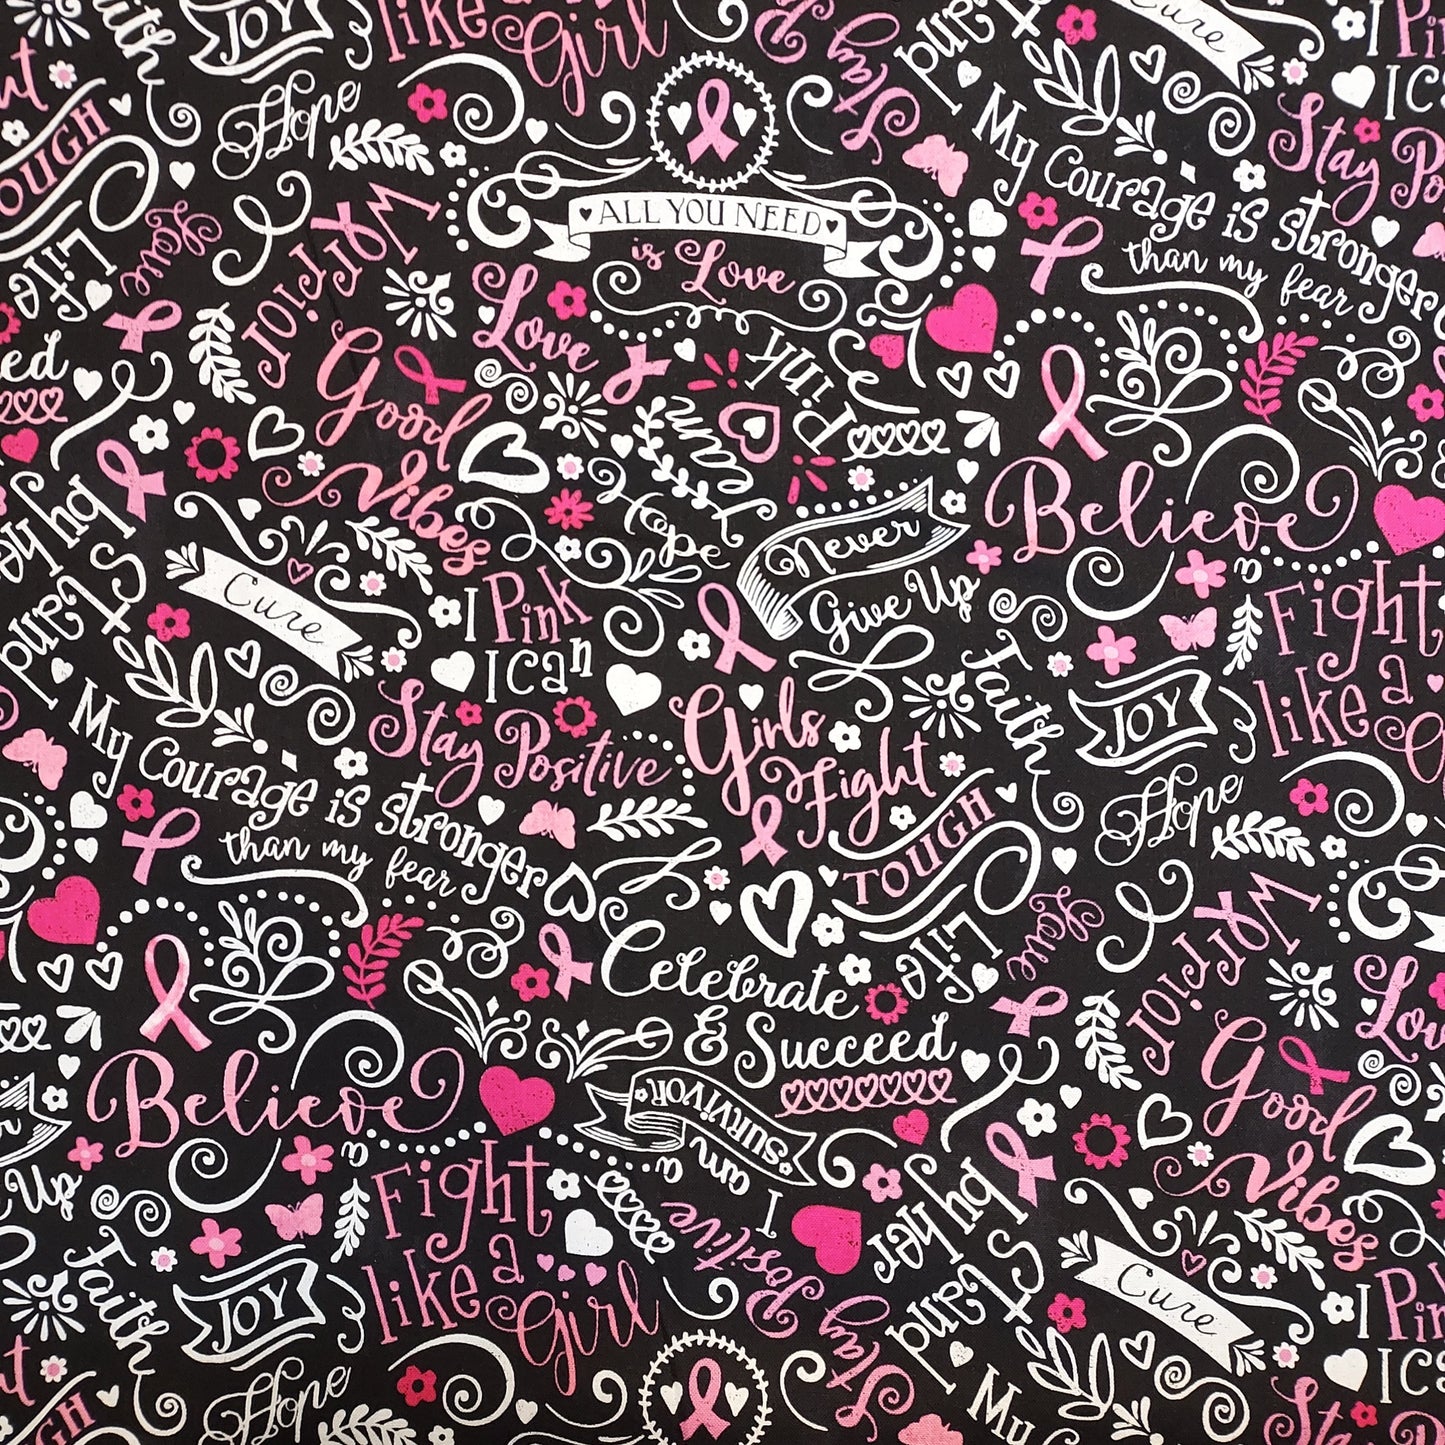 Timeless Treasures 'Think Pink' Black and Pink Graffiti Motif Cotton Fabric.